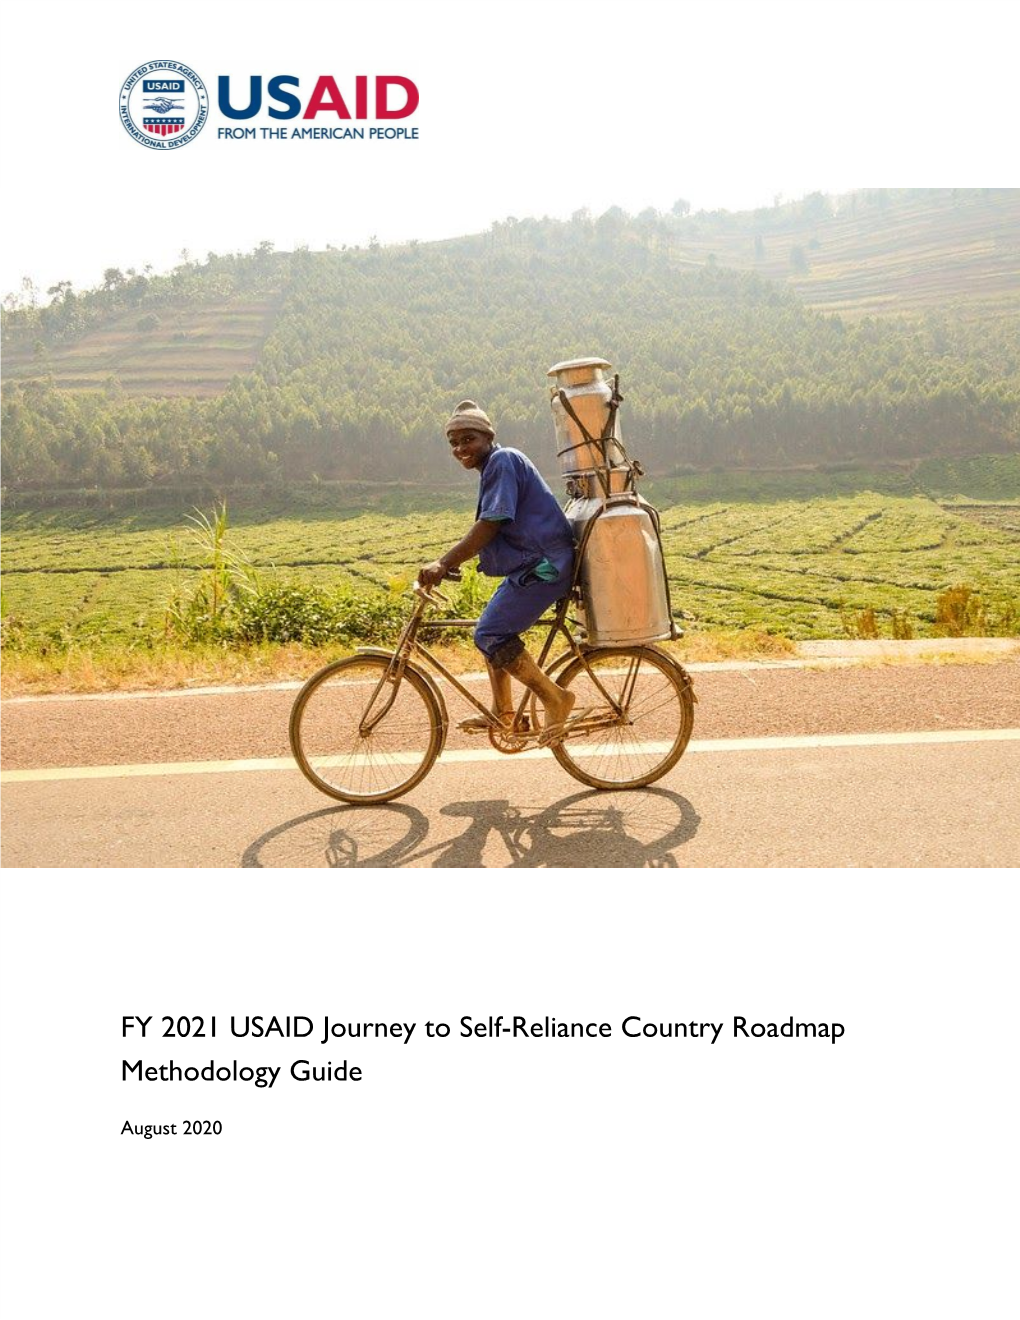 USAID J2SR Country Roadmap Methodology Guide